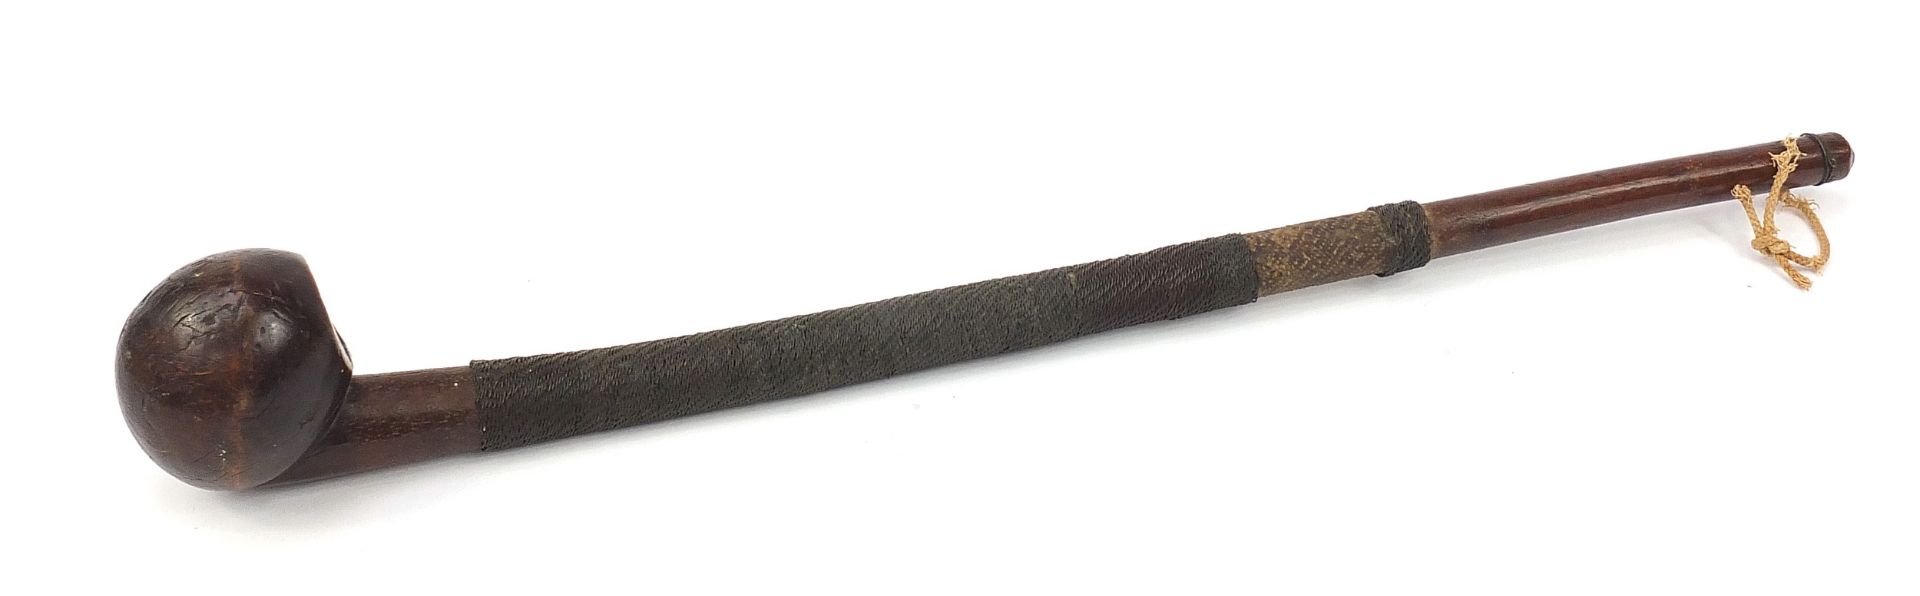 African Tribal interest Knobkerrie with metal bound handle, 60cm in length - Bild 2 aus 4